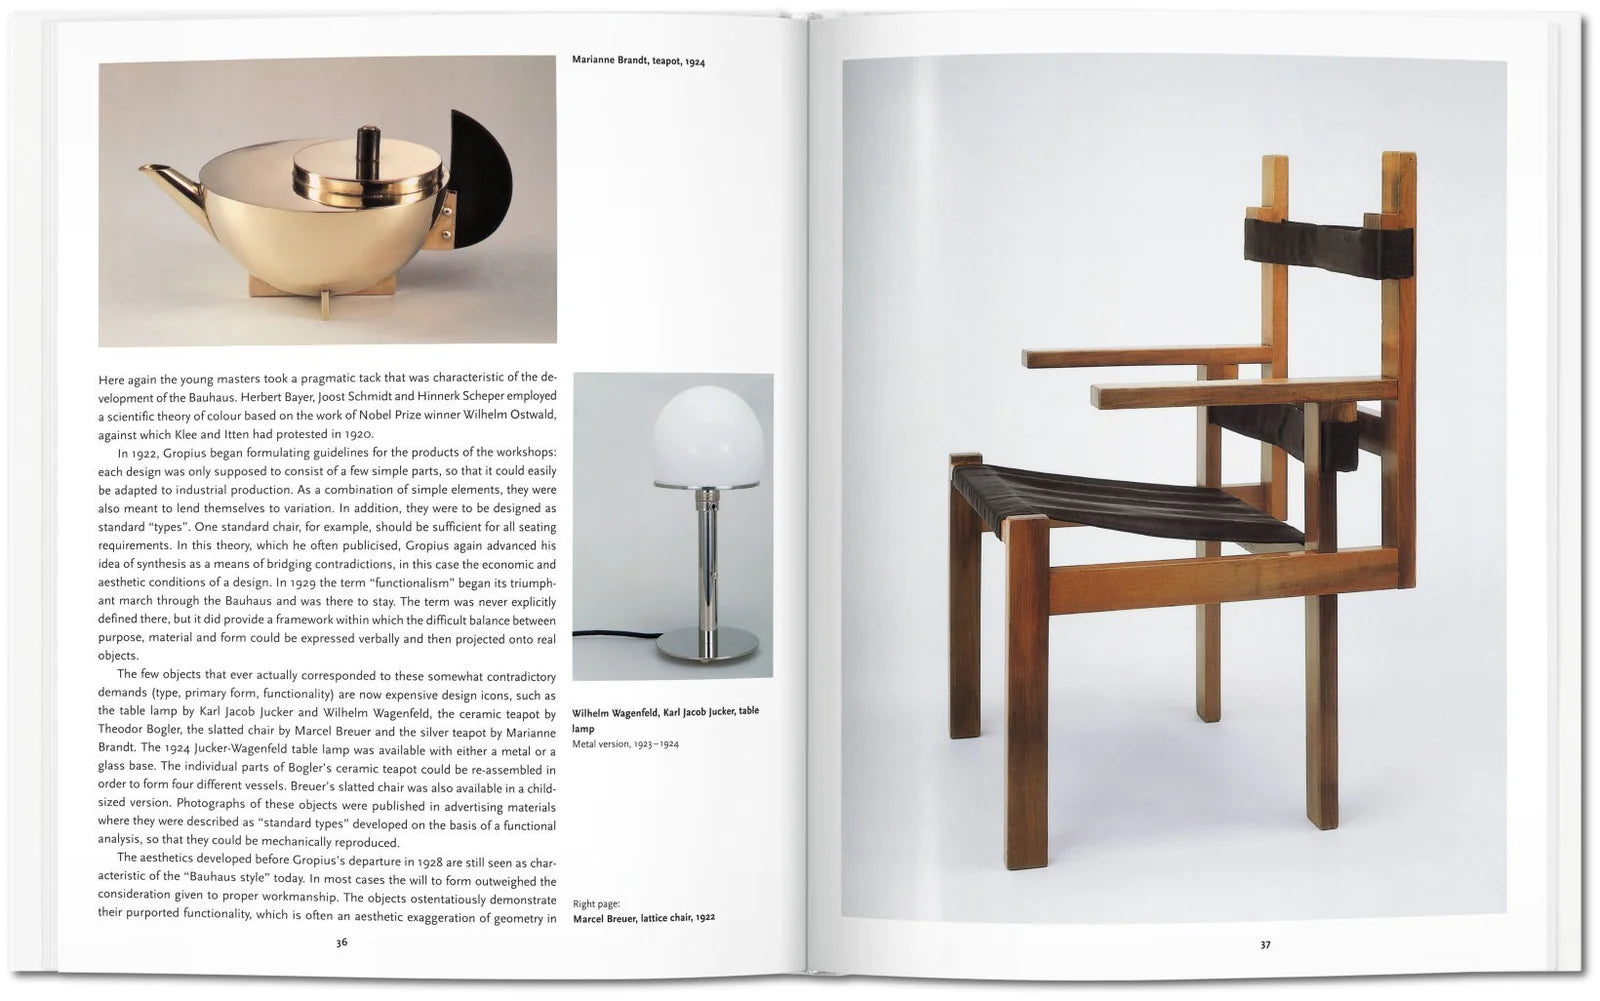 Bauhaus - Basic Art Series by Magdalena Droste